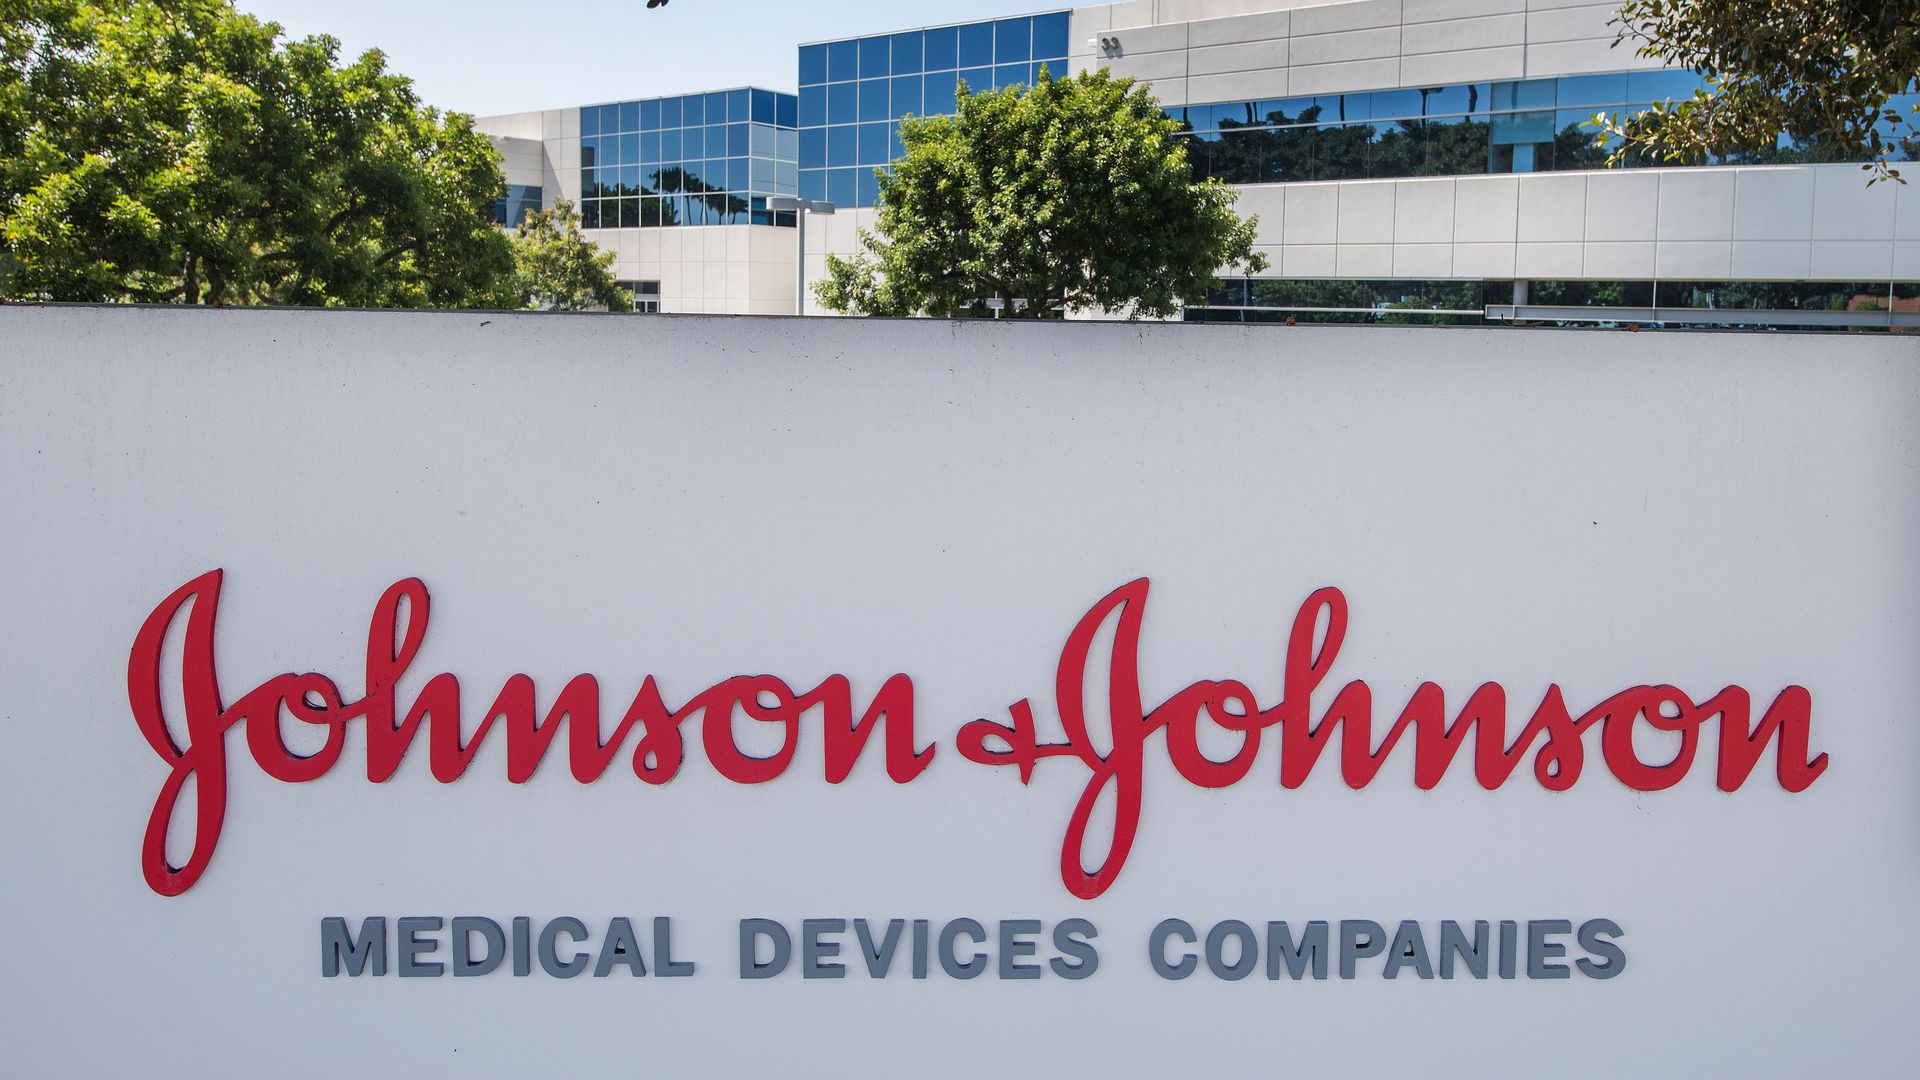 This image shows the Johnson & Johnson logo